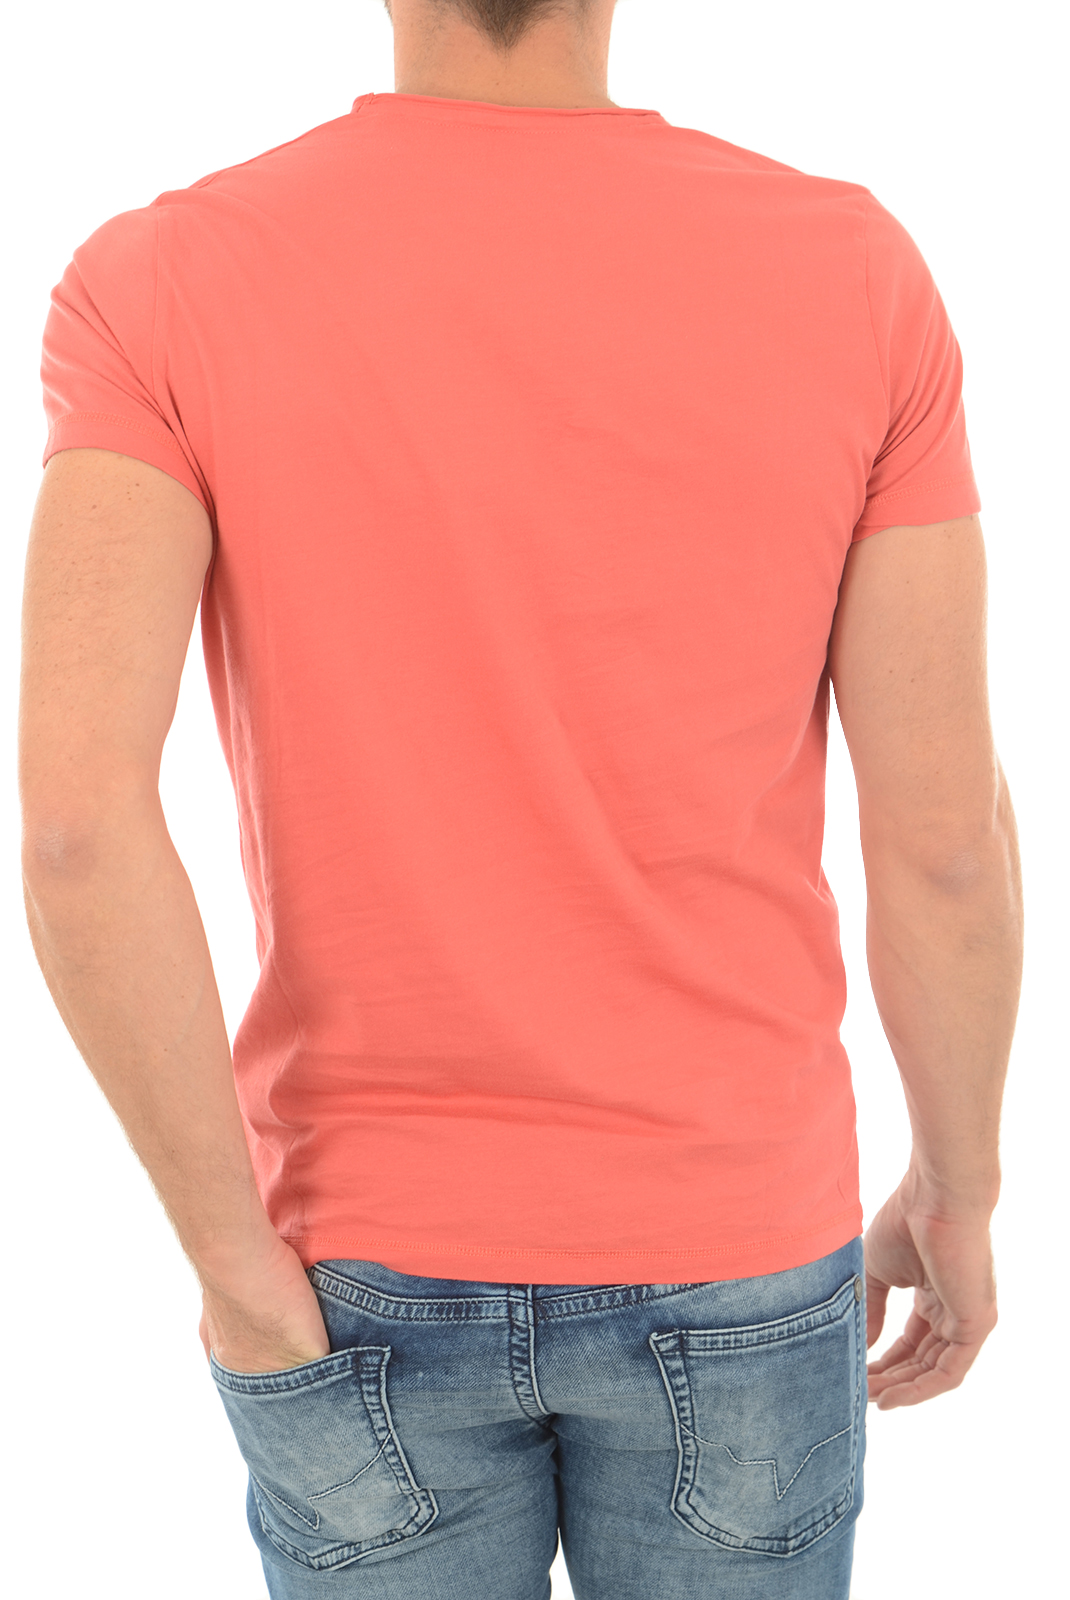 Tee-shirt rose slim luke homme - Pepe Jeans